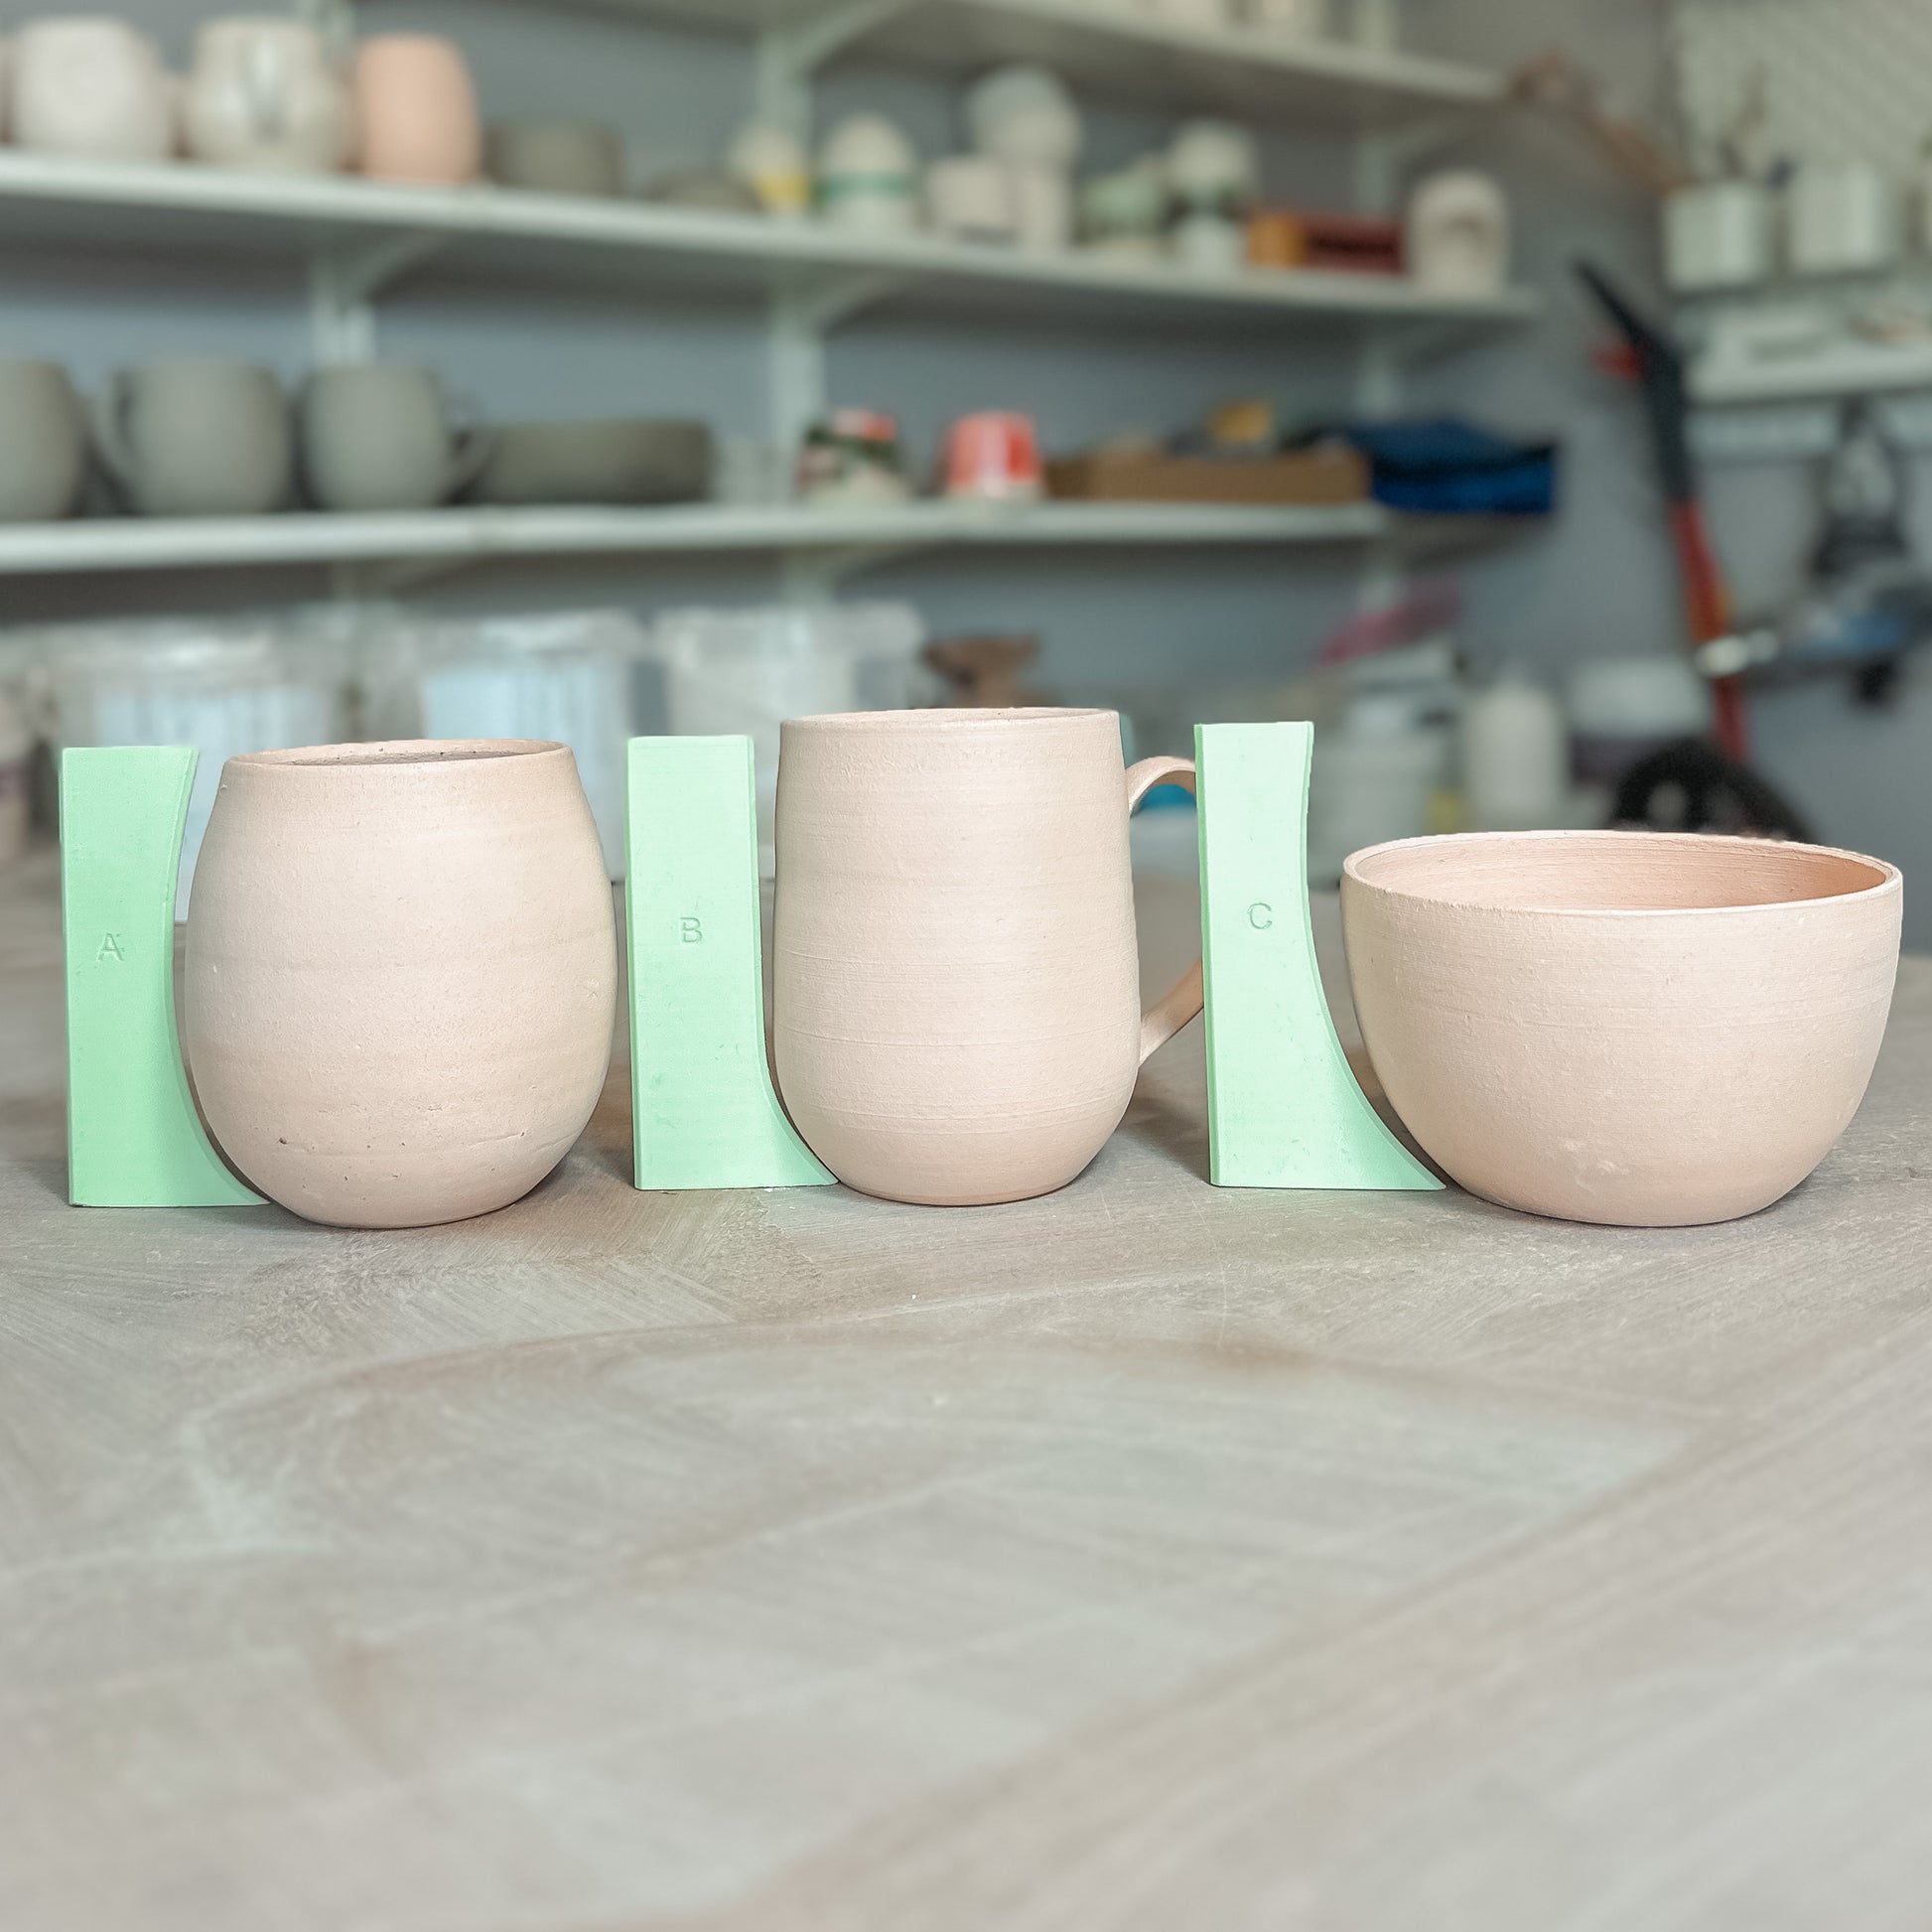 Namvo 3 Pieces 3 Sizes Ceramic Clay Ribs Soft Rubber Kidney Ceramics Rib  Ceramics Potter Rib for Ceramics Clay Artist Modeling